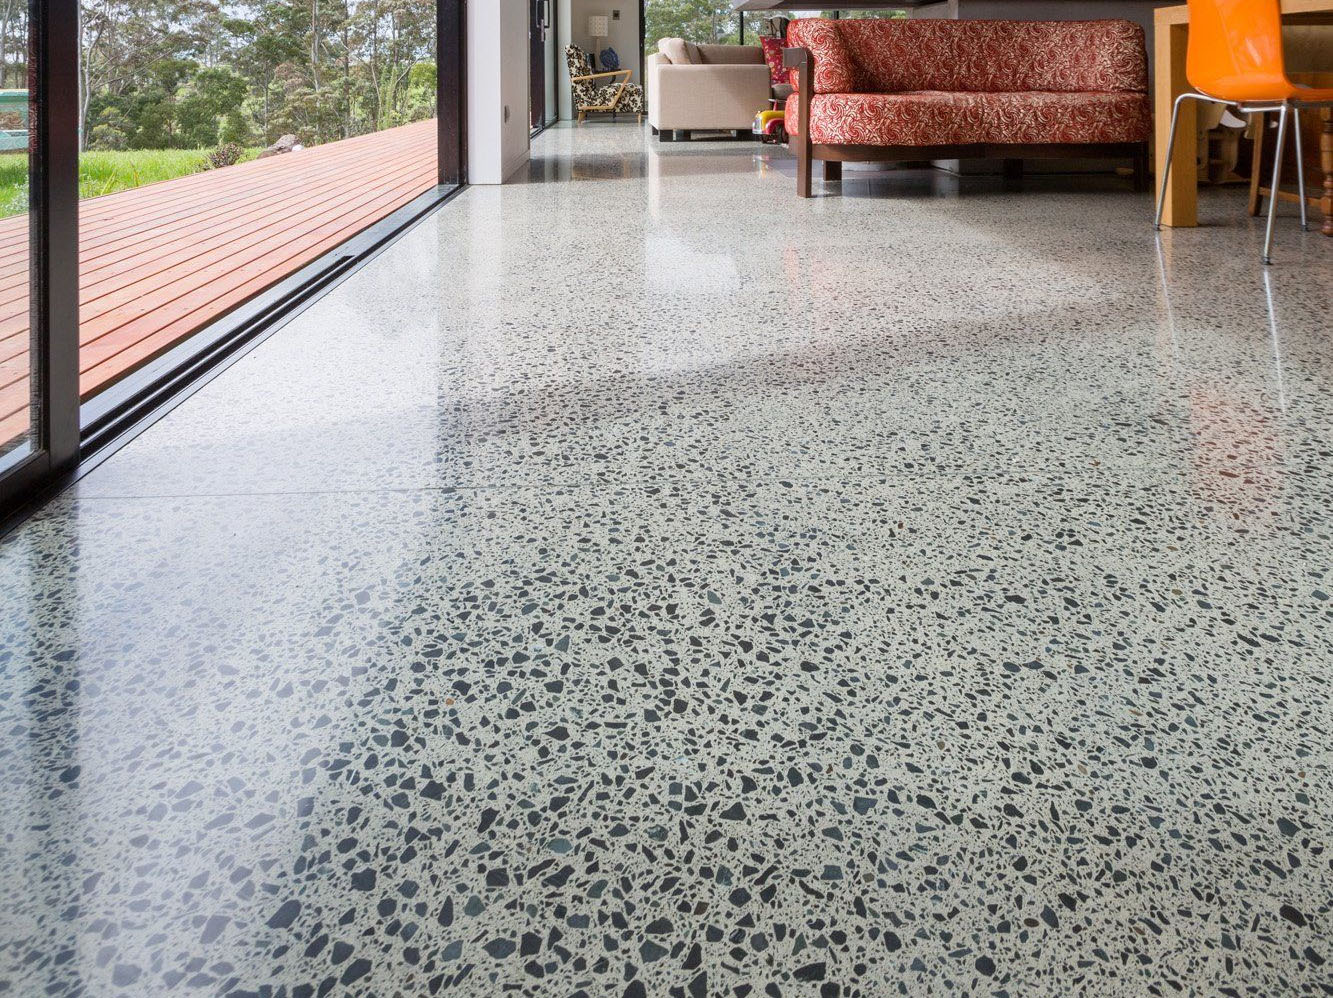 Is terrazzo tile good for flooring